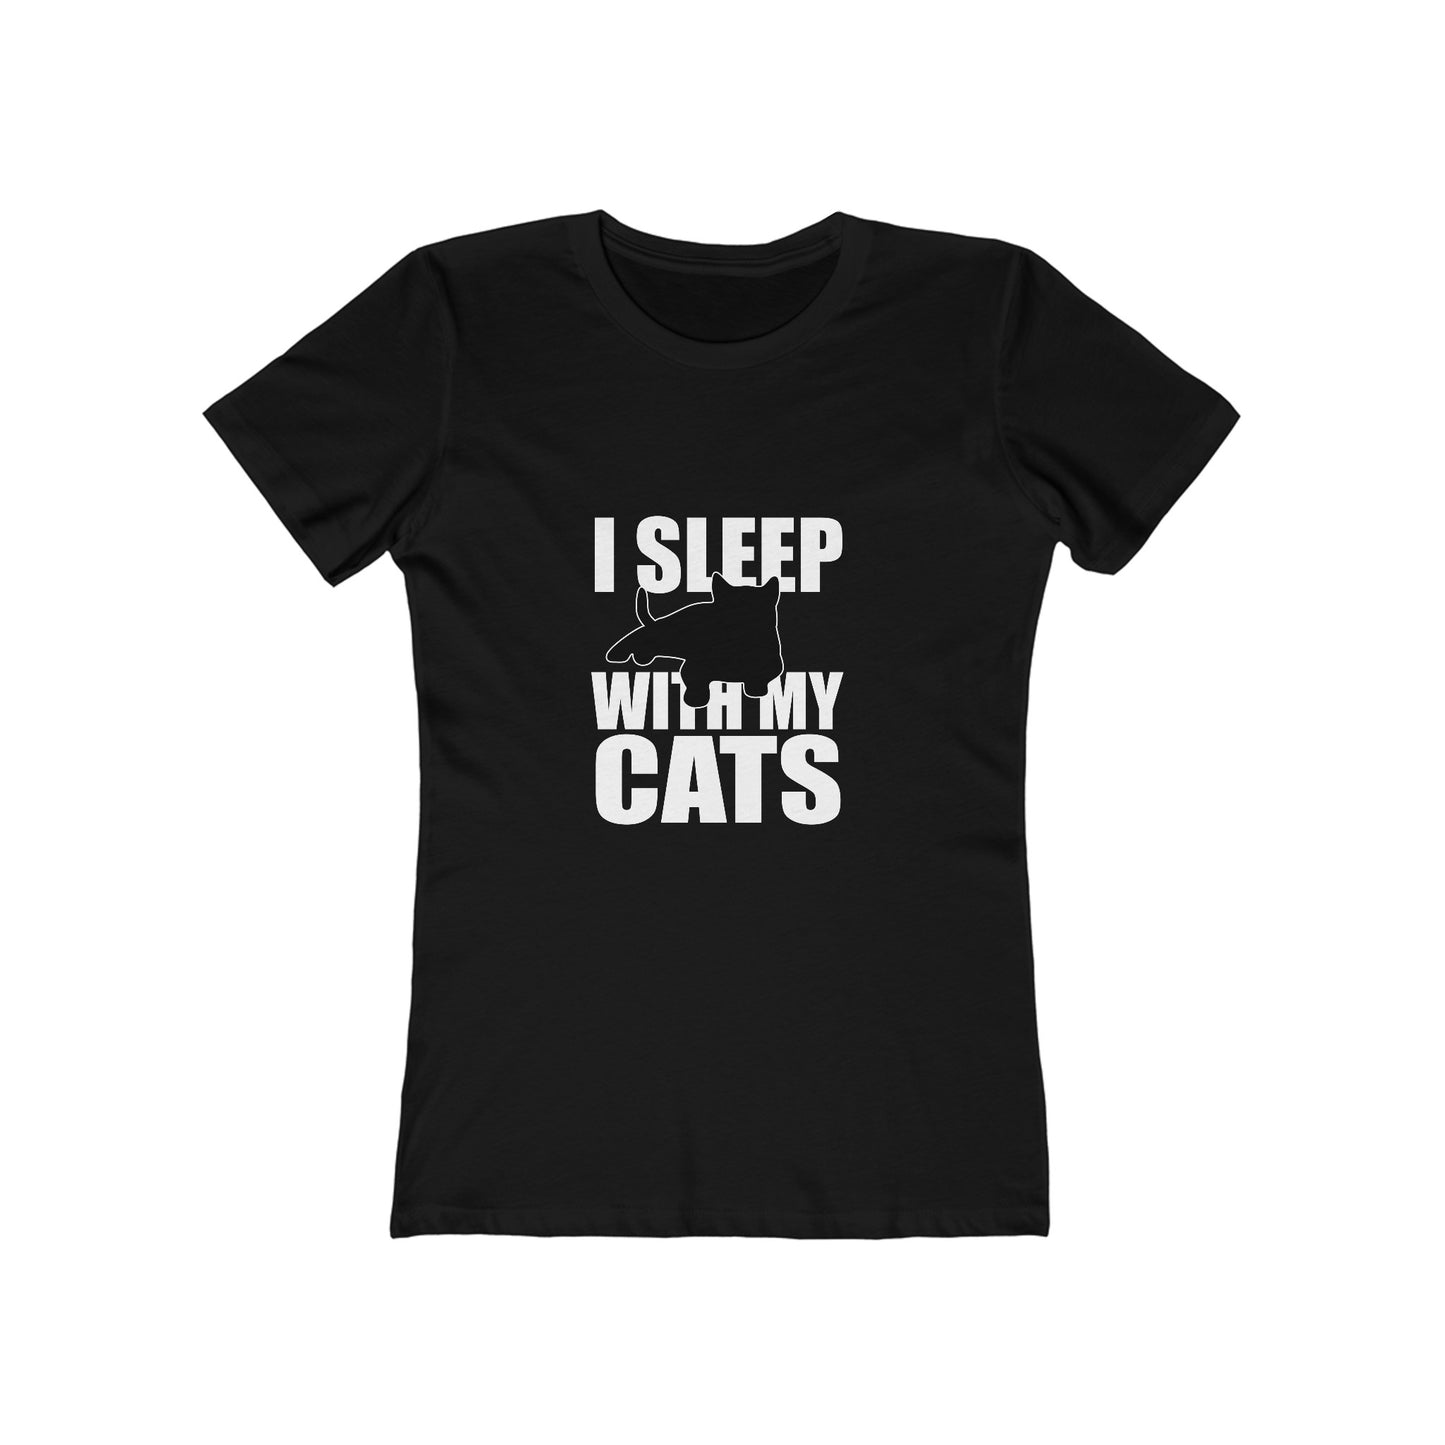 I Sleep With My Cats - Women's T-shirt